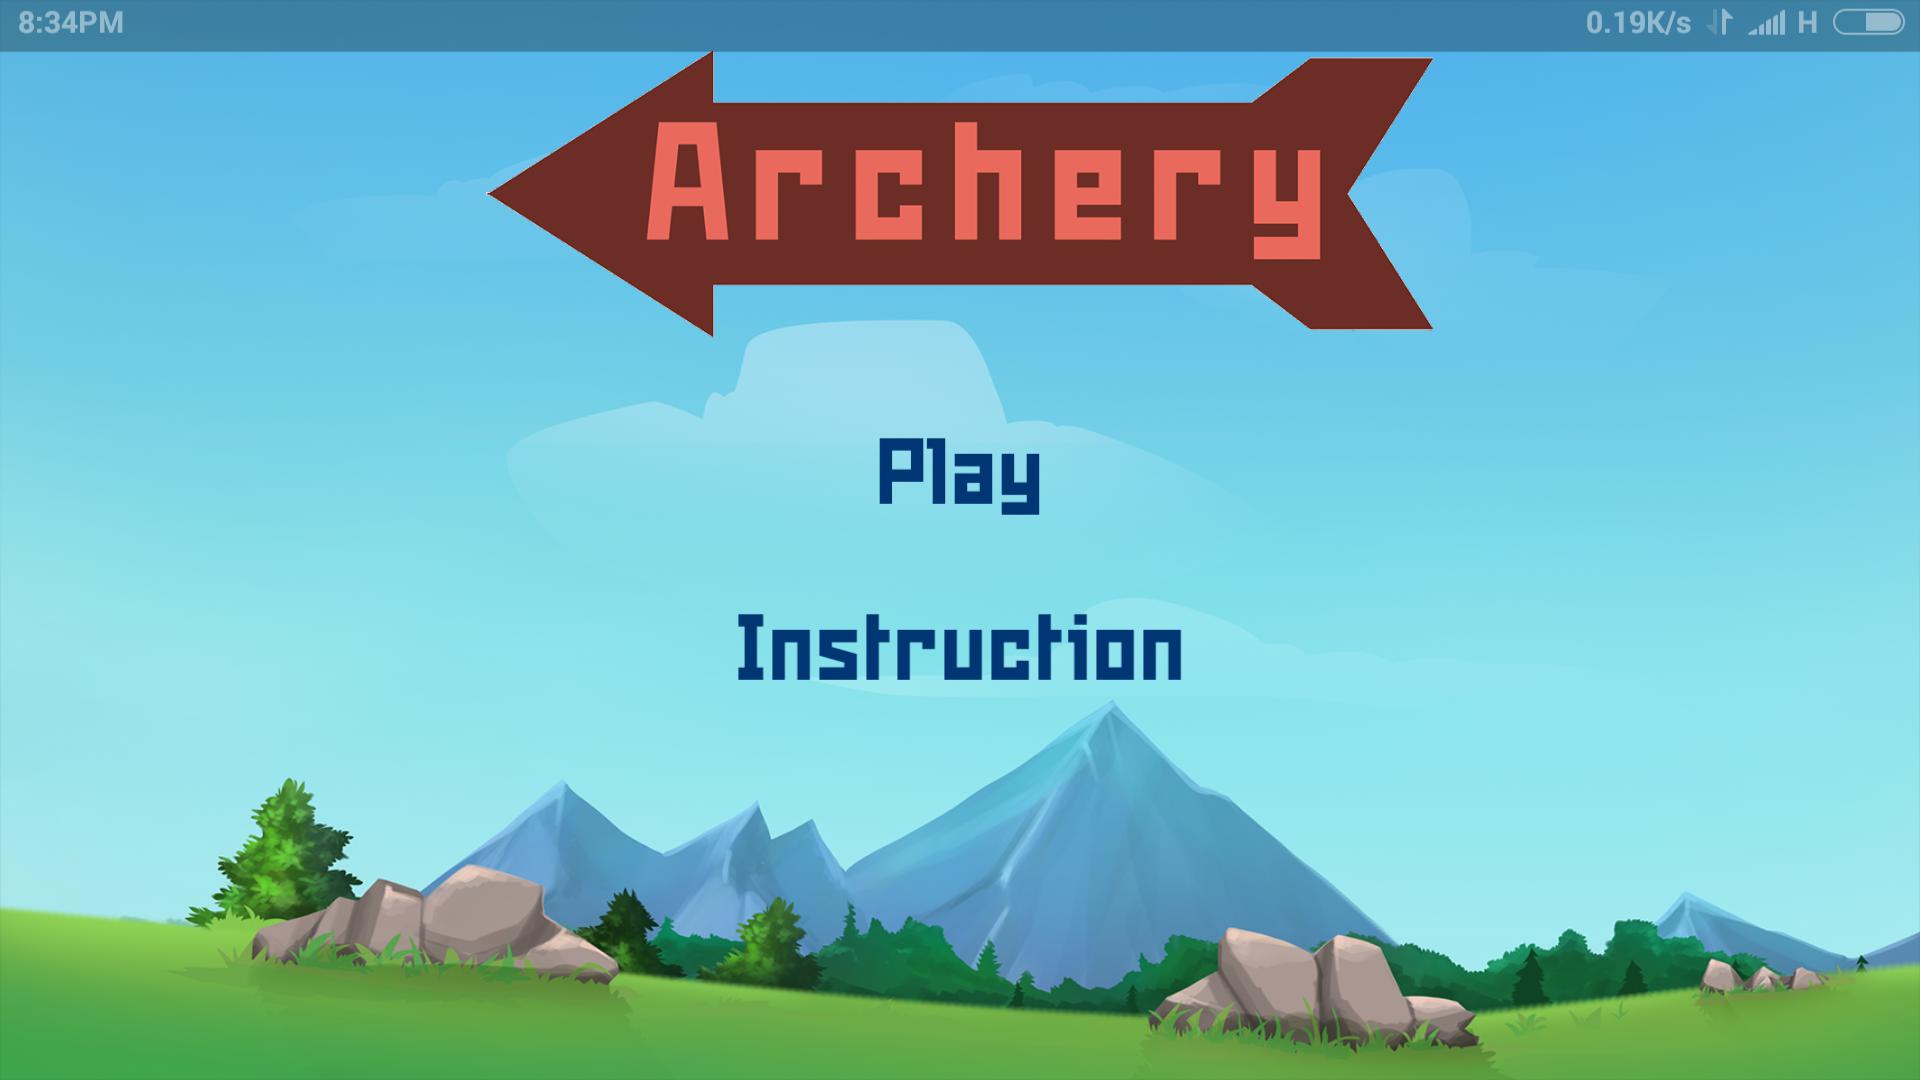 Archery Game SAGA